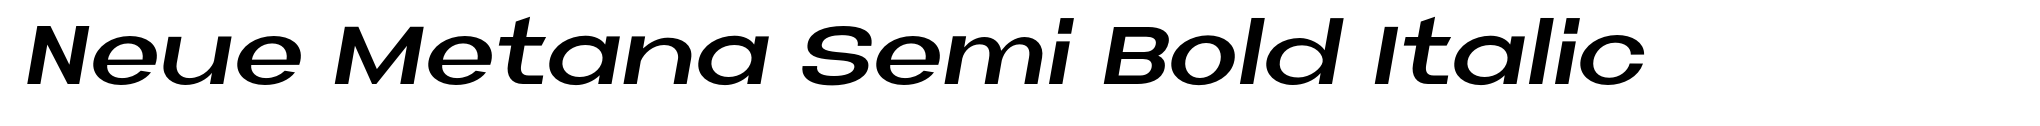 Neue Metana Semi Bold Italic image